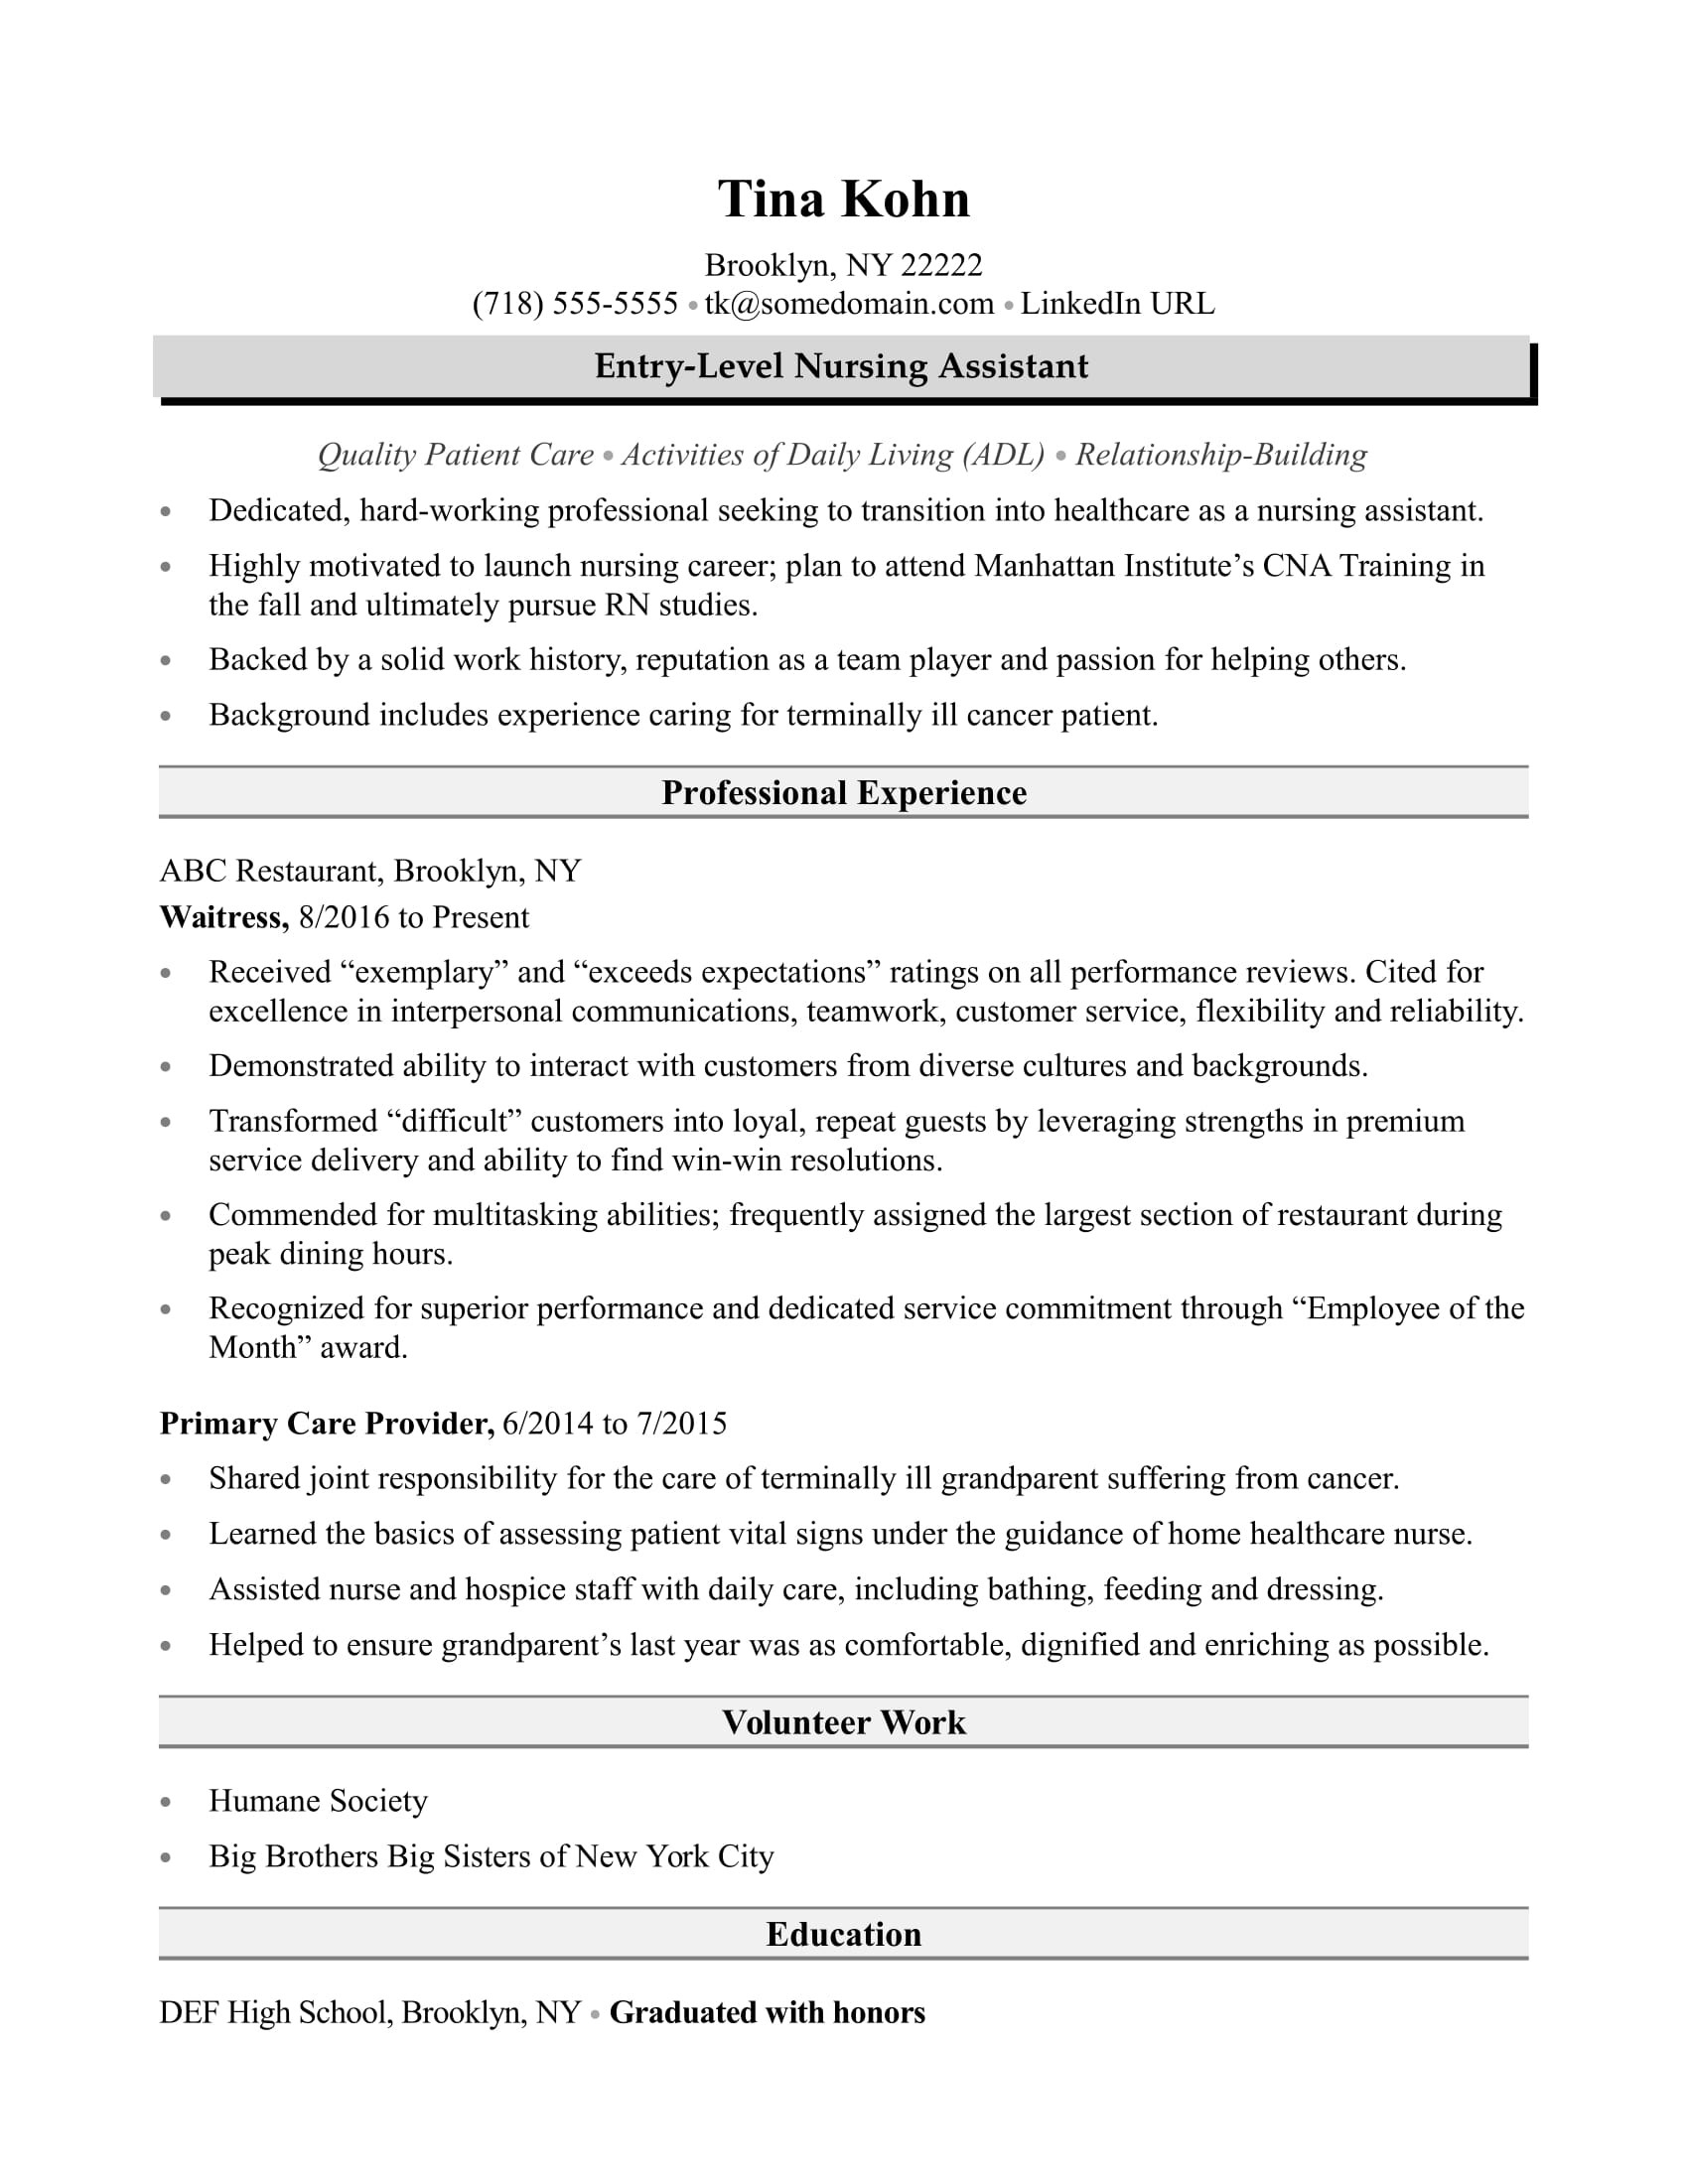 Sample Resume for Registered Nurse with No Experience Nursing assistant Resume Sample Monster.com